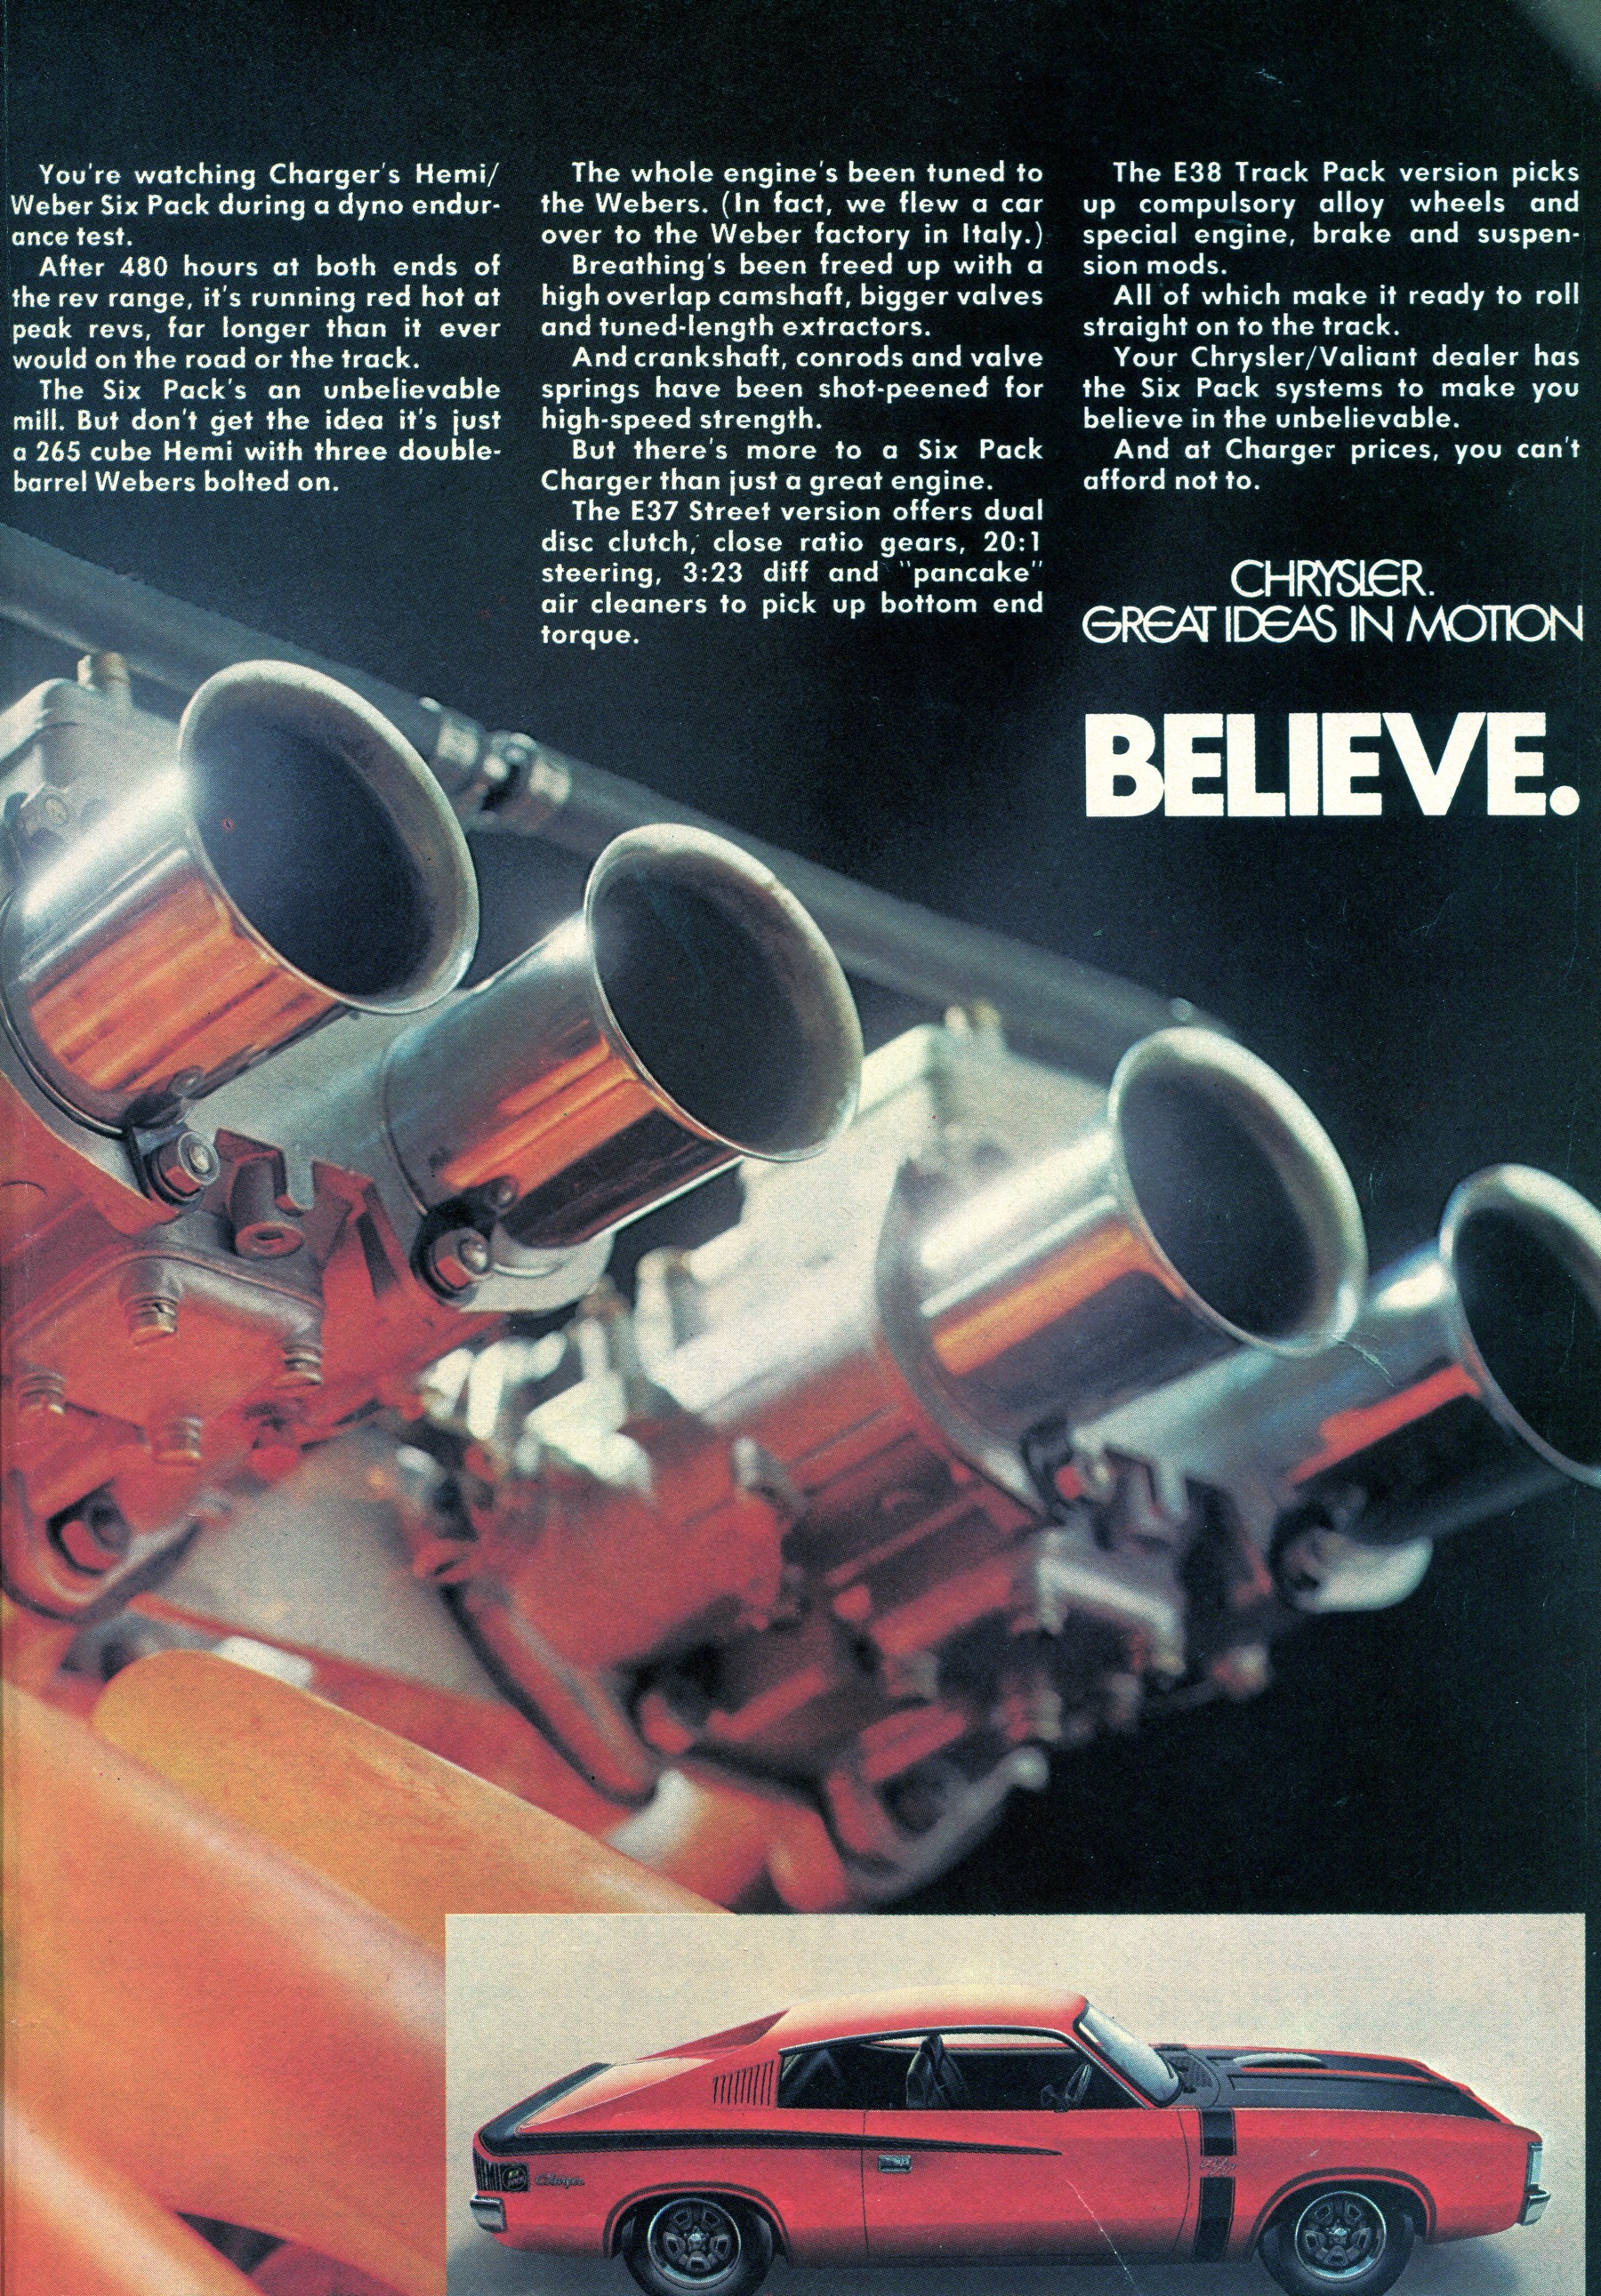 1972 Chrysler Great Ideas In Motion